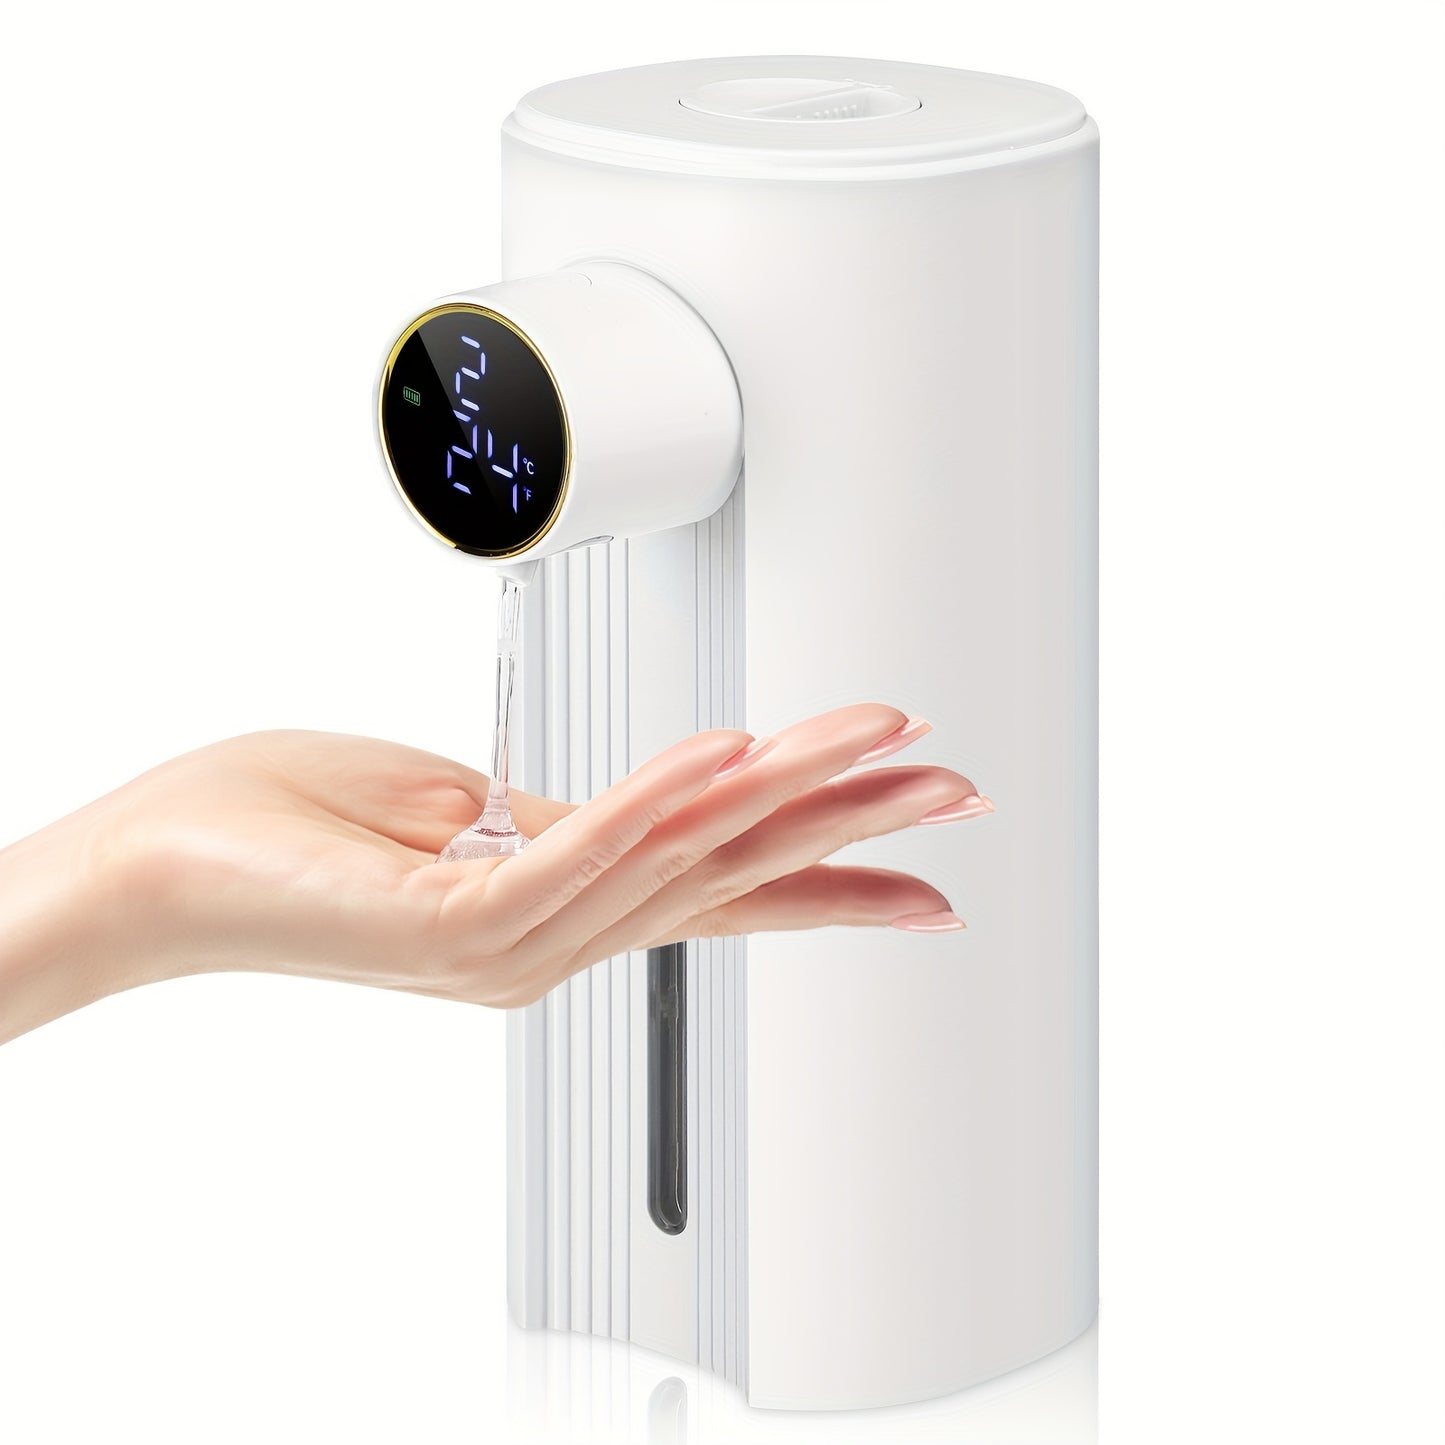 1PC desktop intelligent soap dispenser, soap dispenser with LED display screen, 5 adjustable gears, with rechargeable sensor, 350ml/11.83OZ contactless soap dispenser